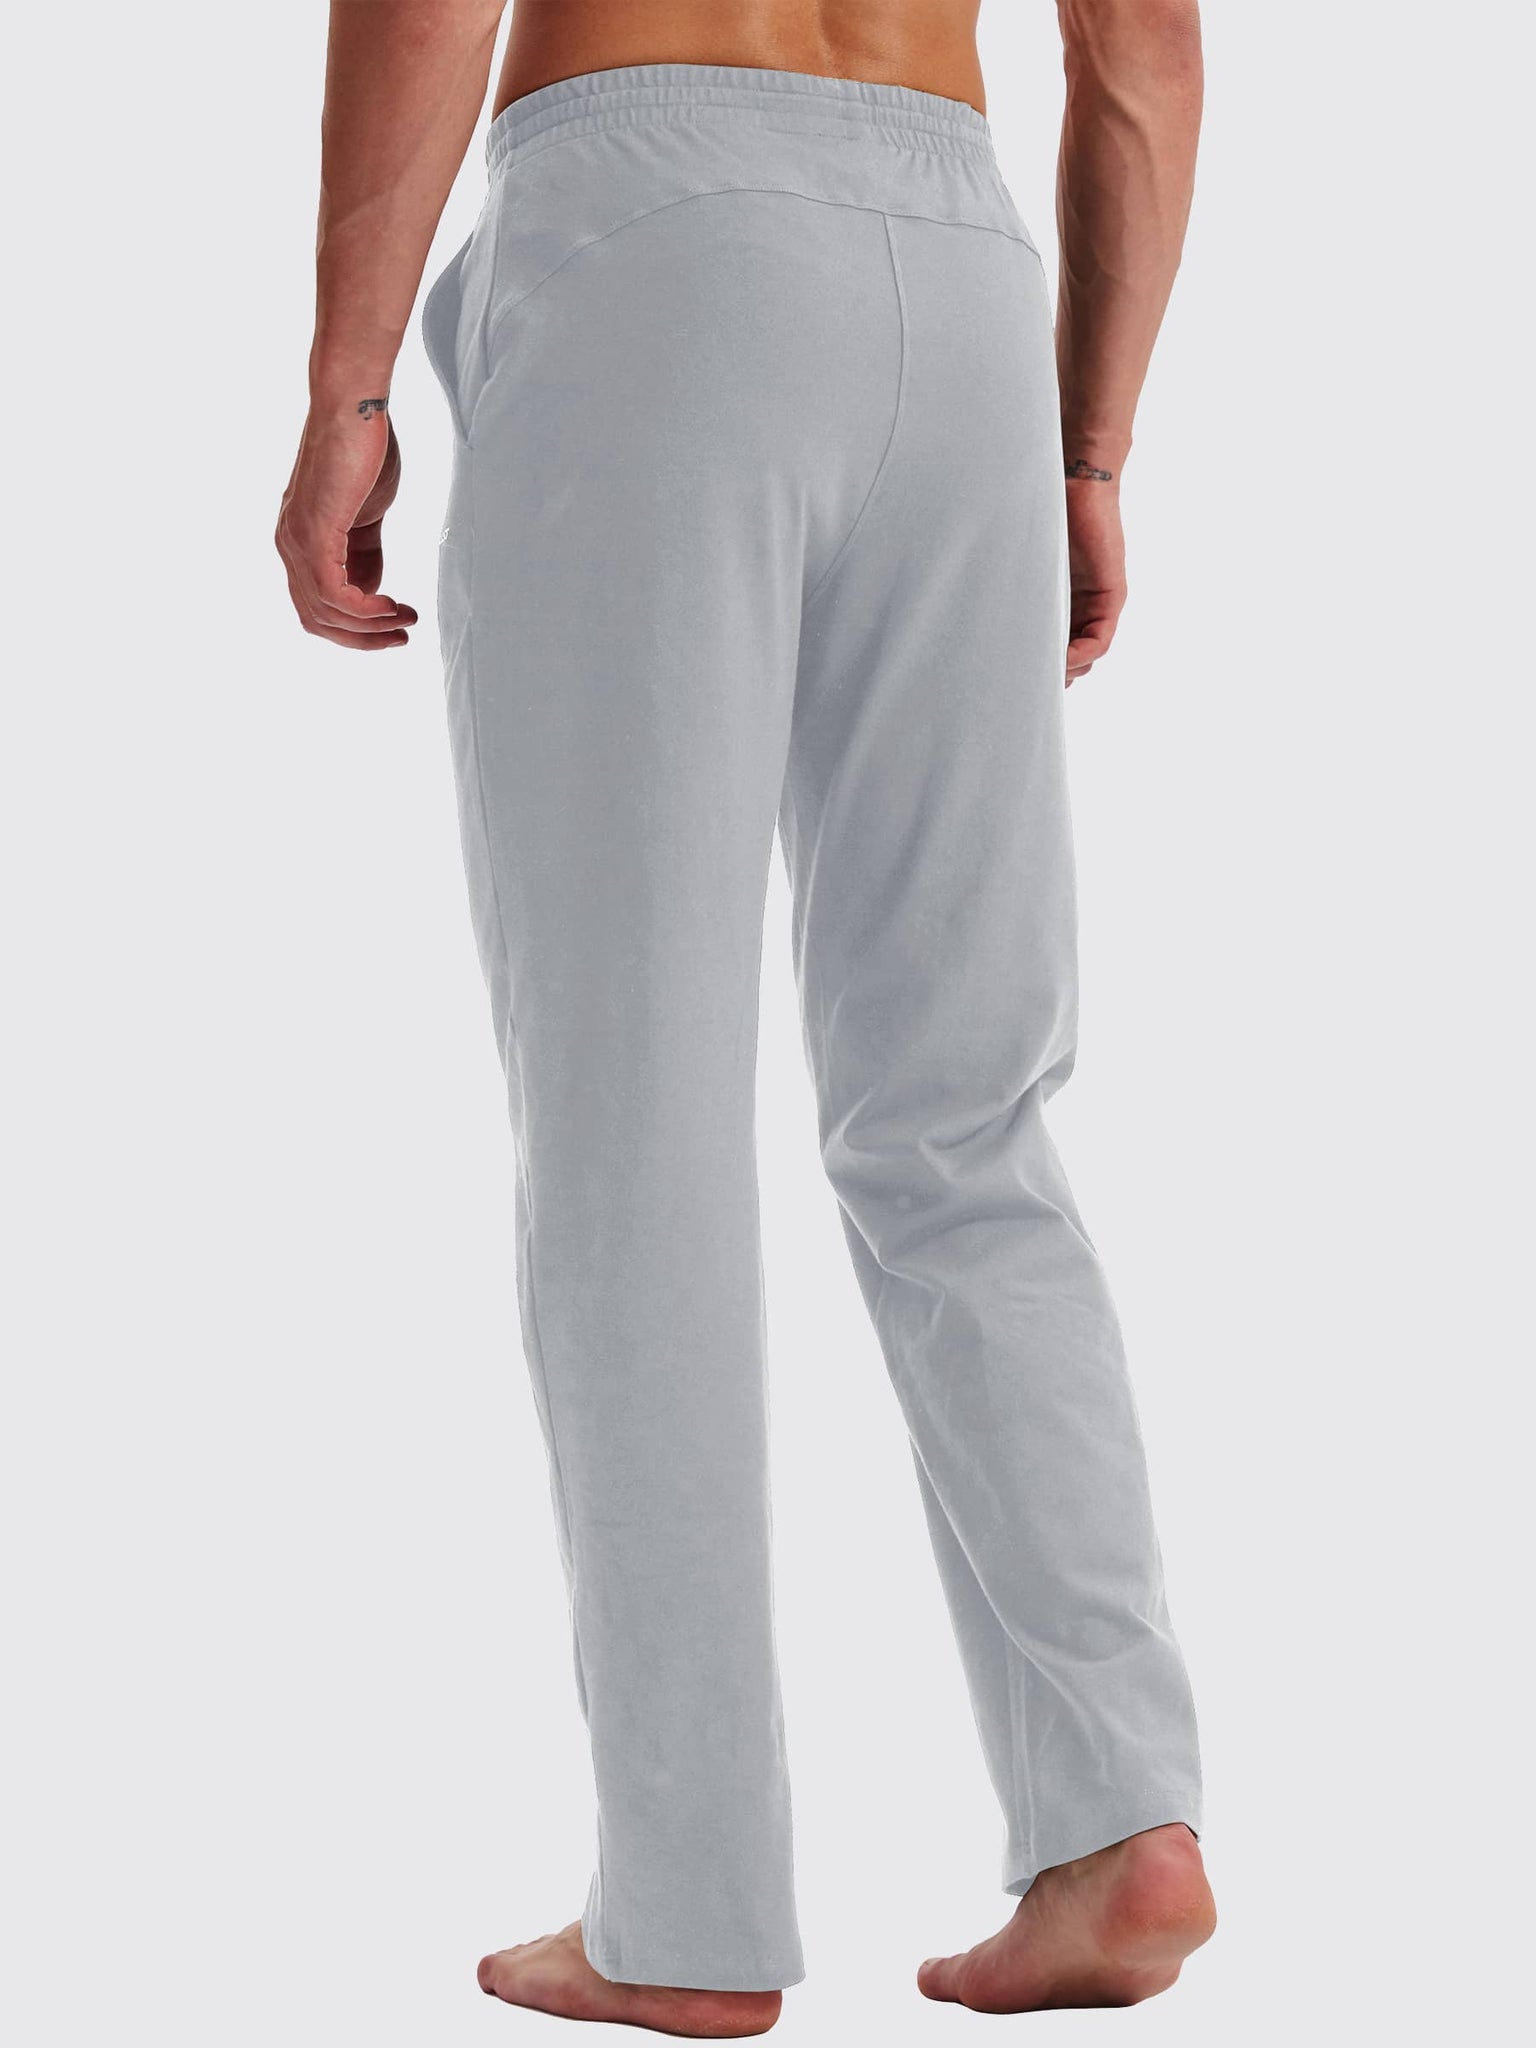 Men's Cotton Yoga Balance Sweatpants_StoneGray_model5